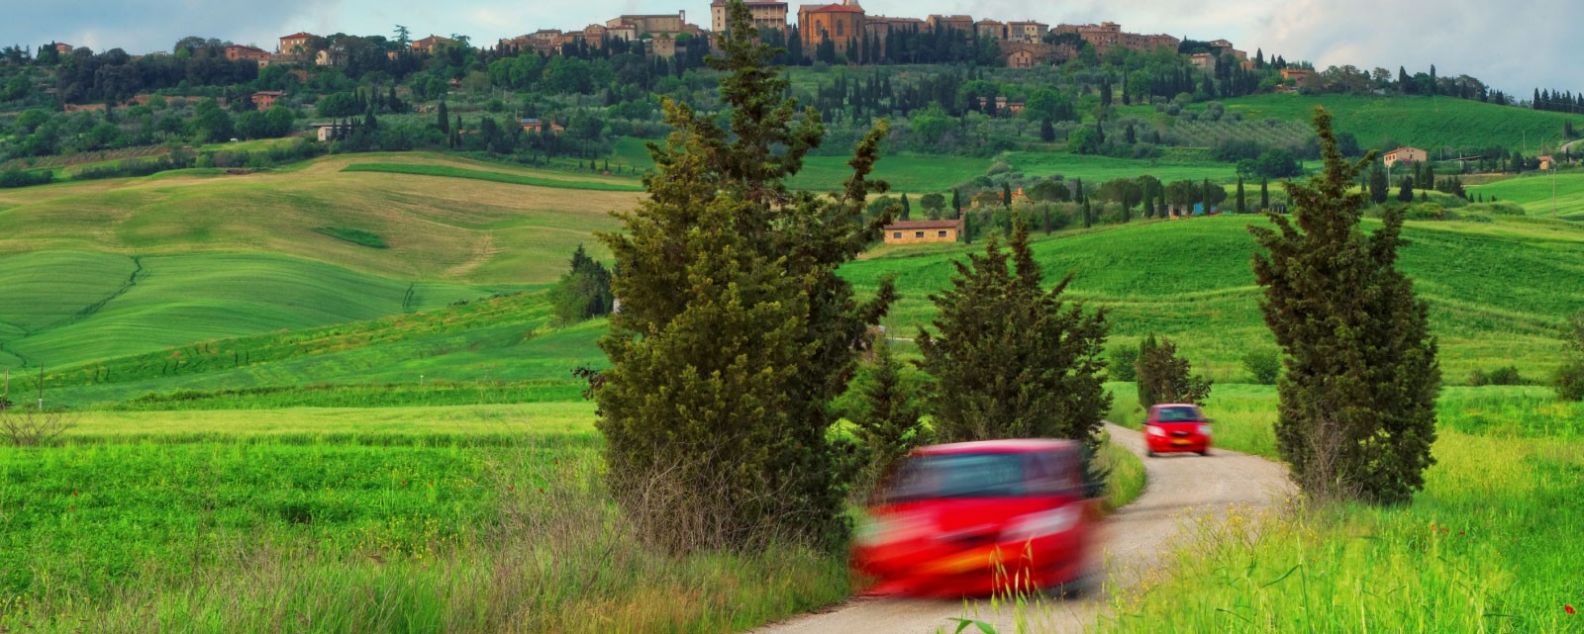 Gerakan mengaburkan mobil di jalan tanah di Tuscany